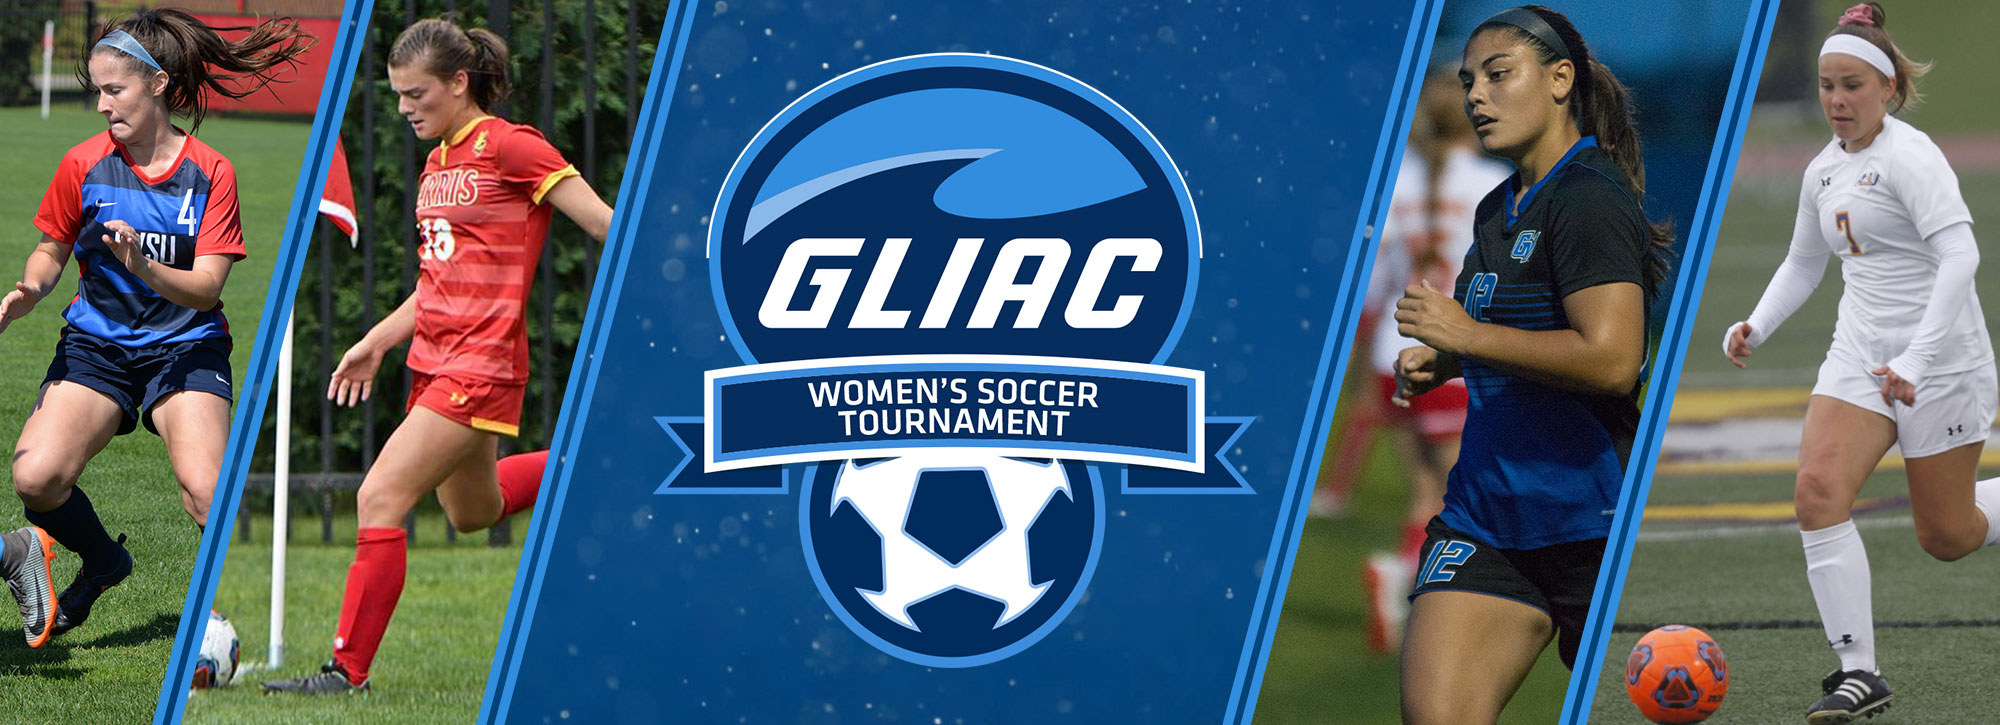 Grand Valley State, Ferris State, Saginaw Valley & Ashland Advance to GLIAC Women's Soccer Tournament Semifinals